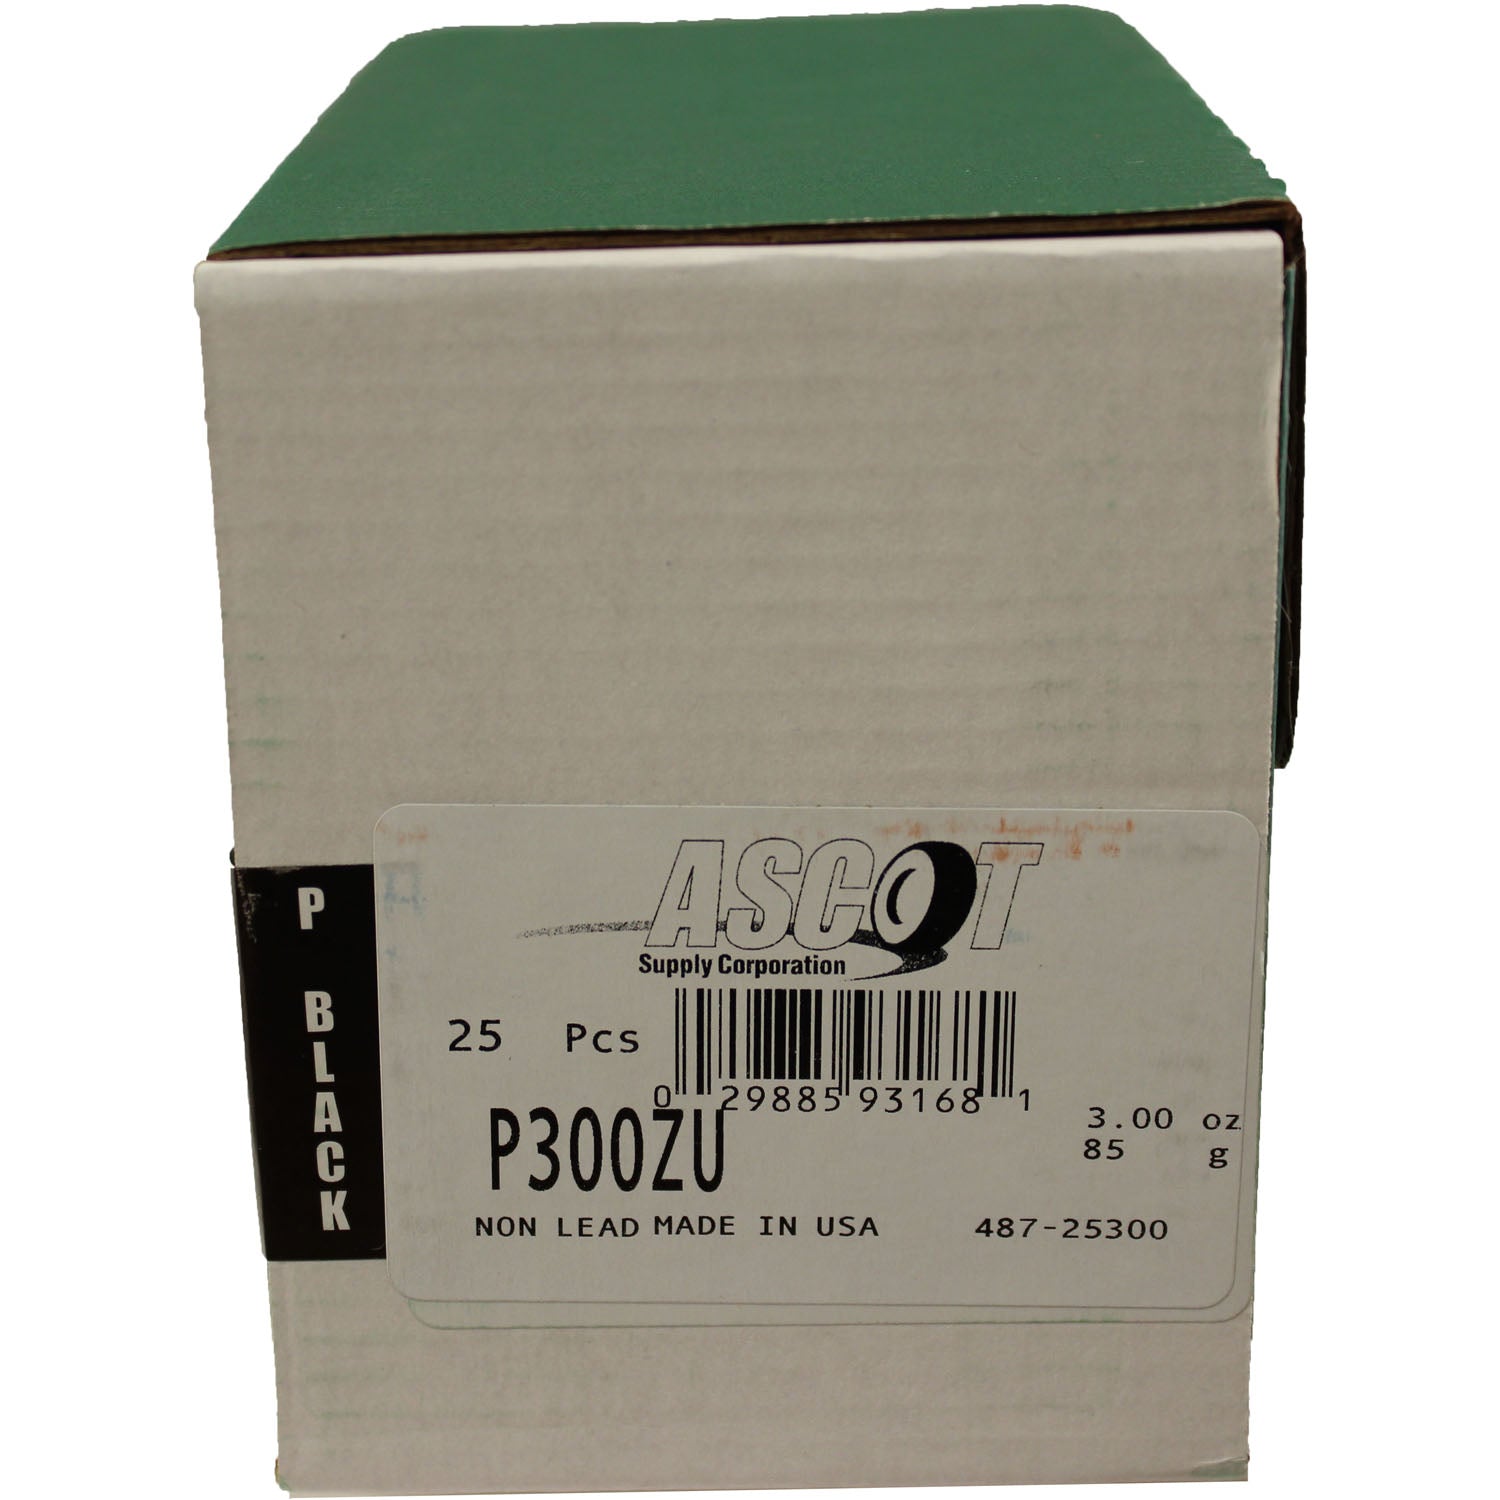 Perfect Equipment P300ZU Uncoated Zinc Wheel Weight 3.00 oz - Box of 25